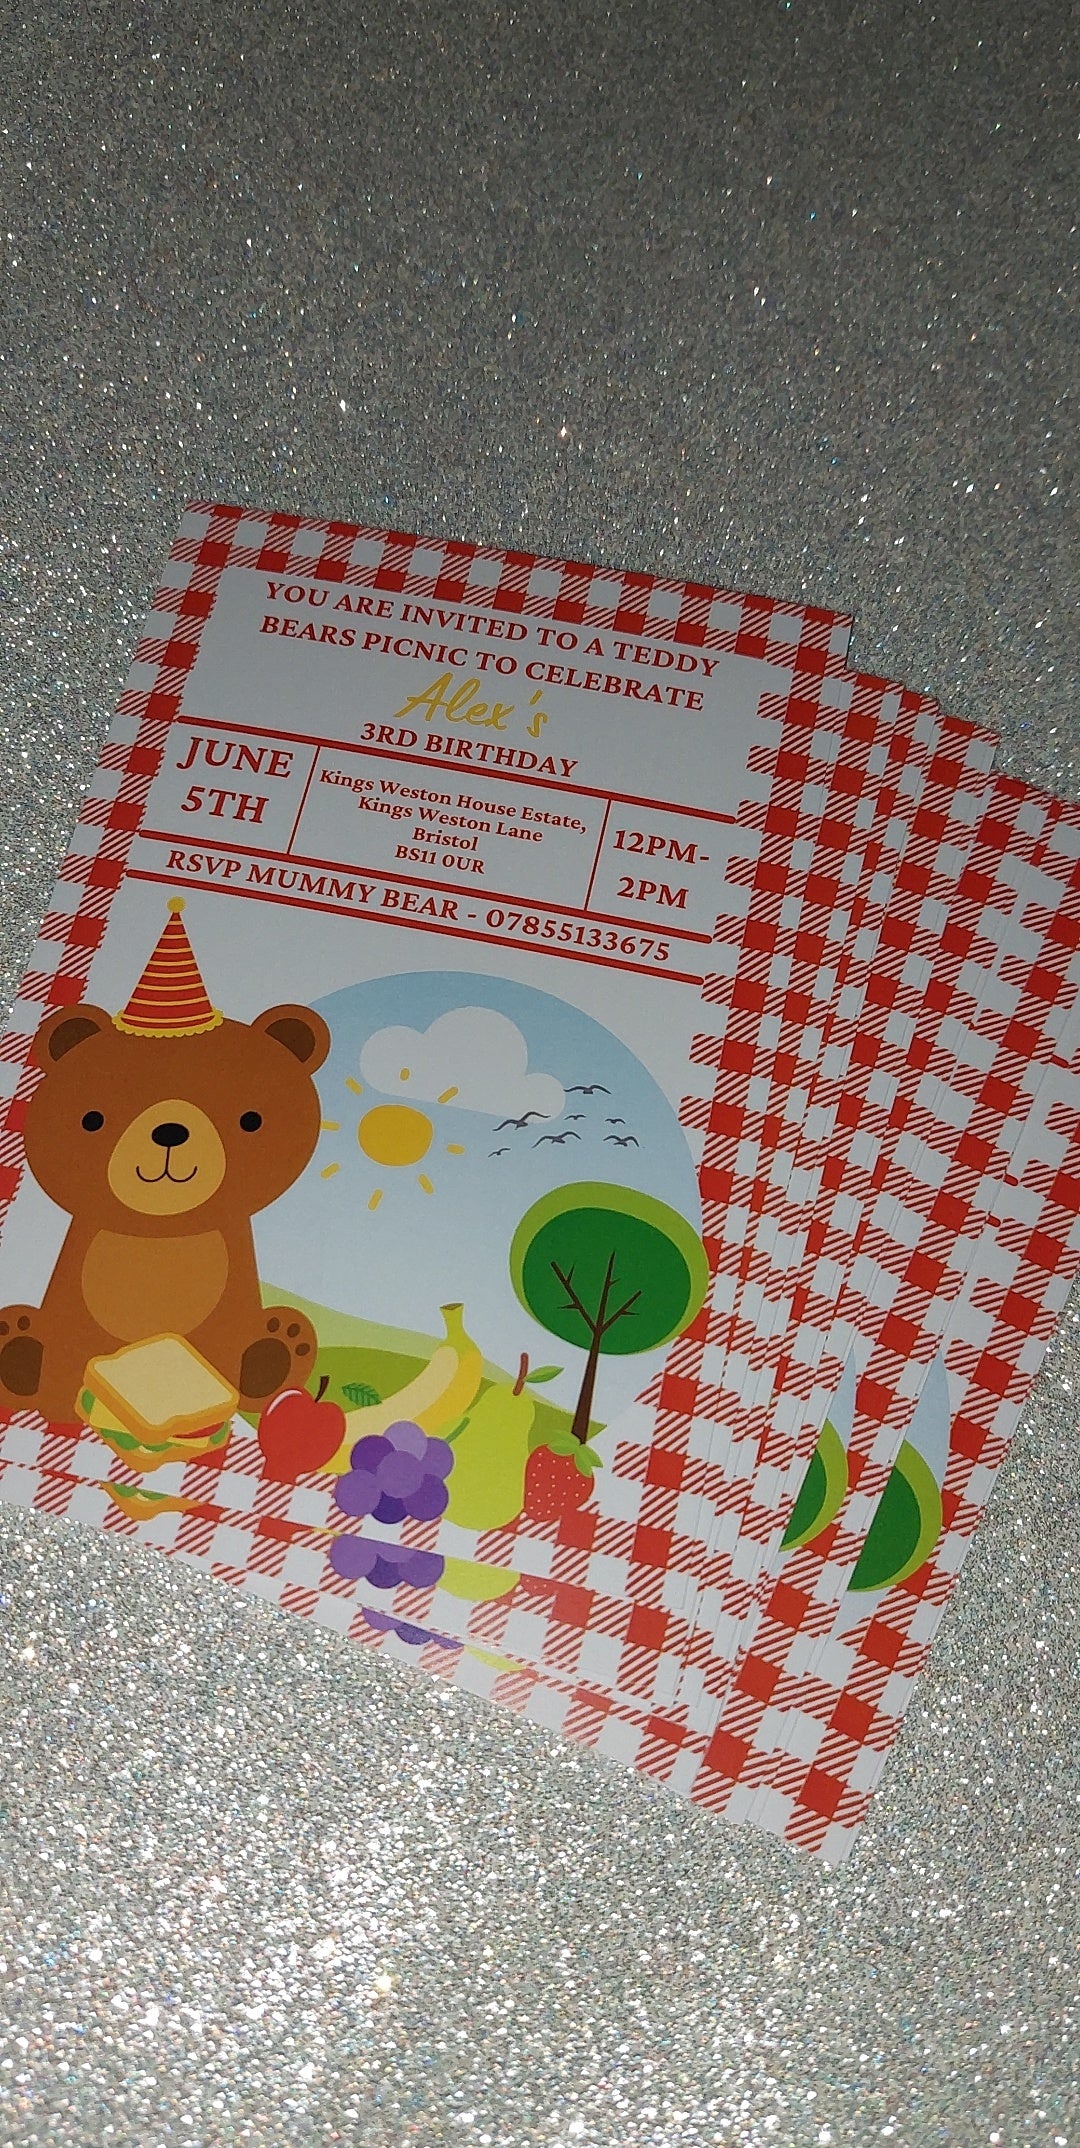 Red Teddy Bear Picnic Invitations | A6 Invites | Teddy Bear Theme Invitations | Party Invitations